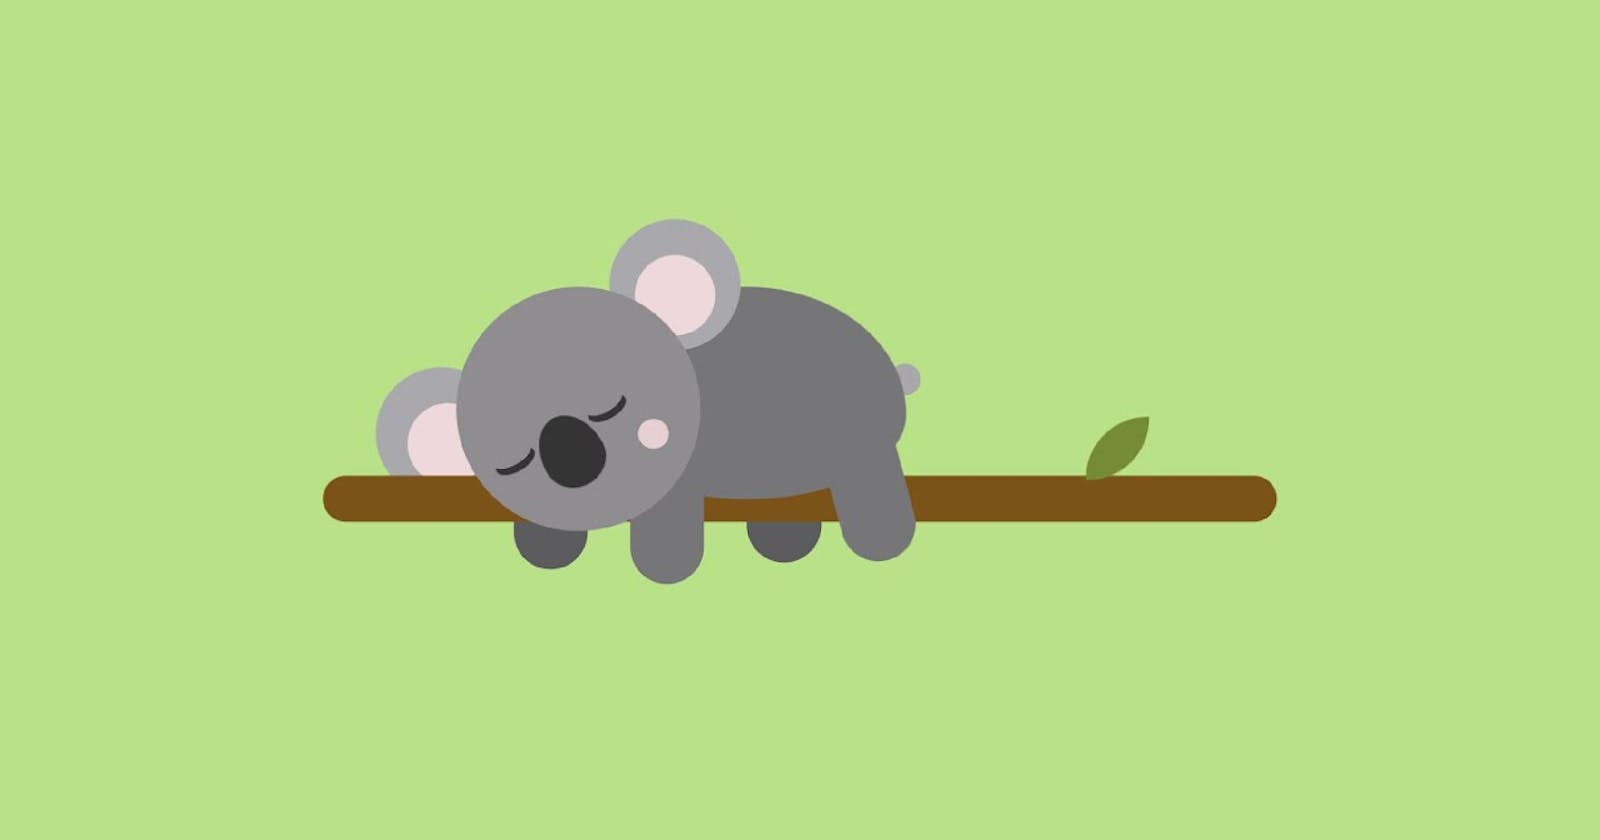 Cute Koala Illustration | CSS Art | CSS Project